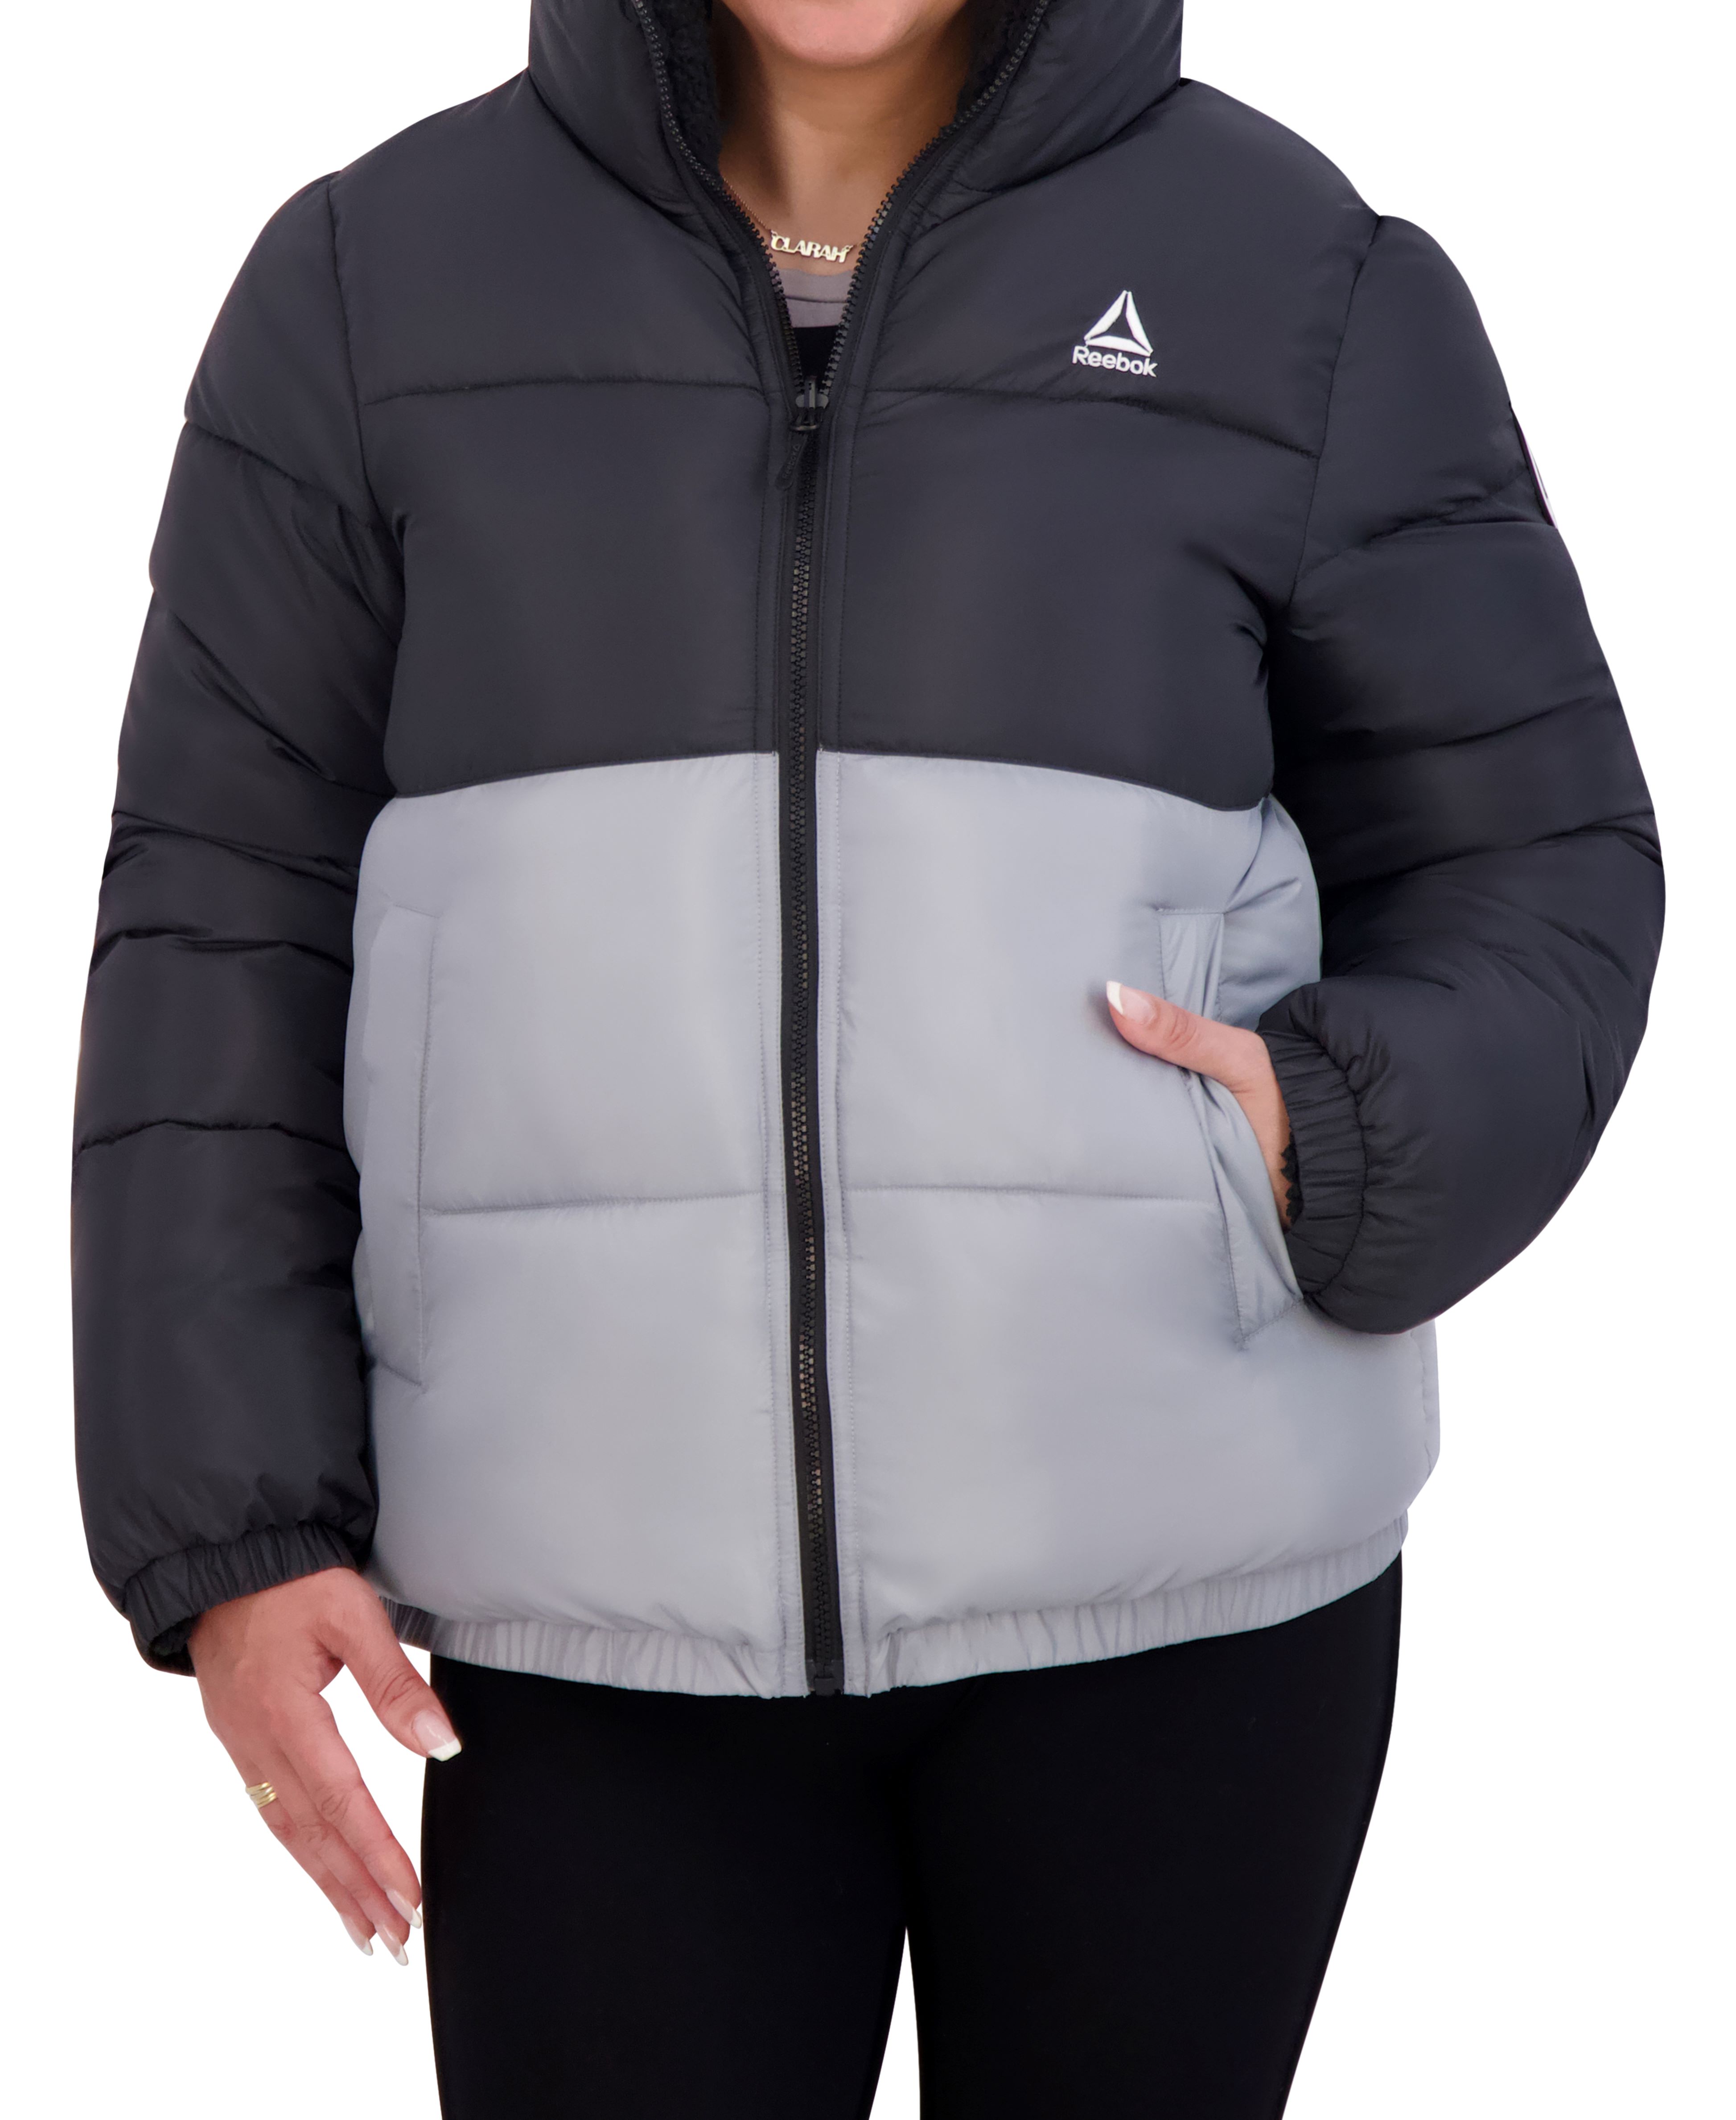 Reebok Women's Reversible Puffer and Faux Shearling Jacket, Sizes XS-3X - image 1 of 3